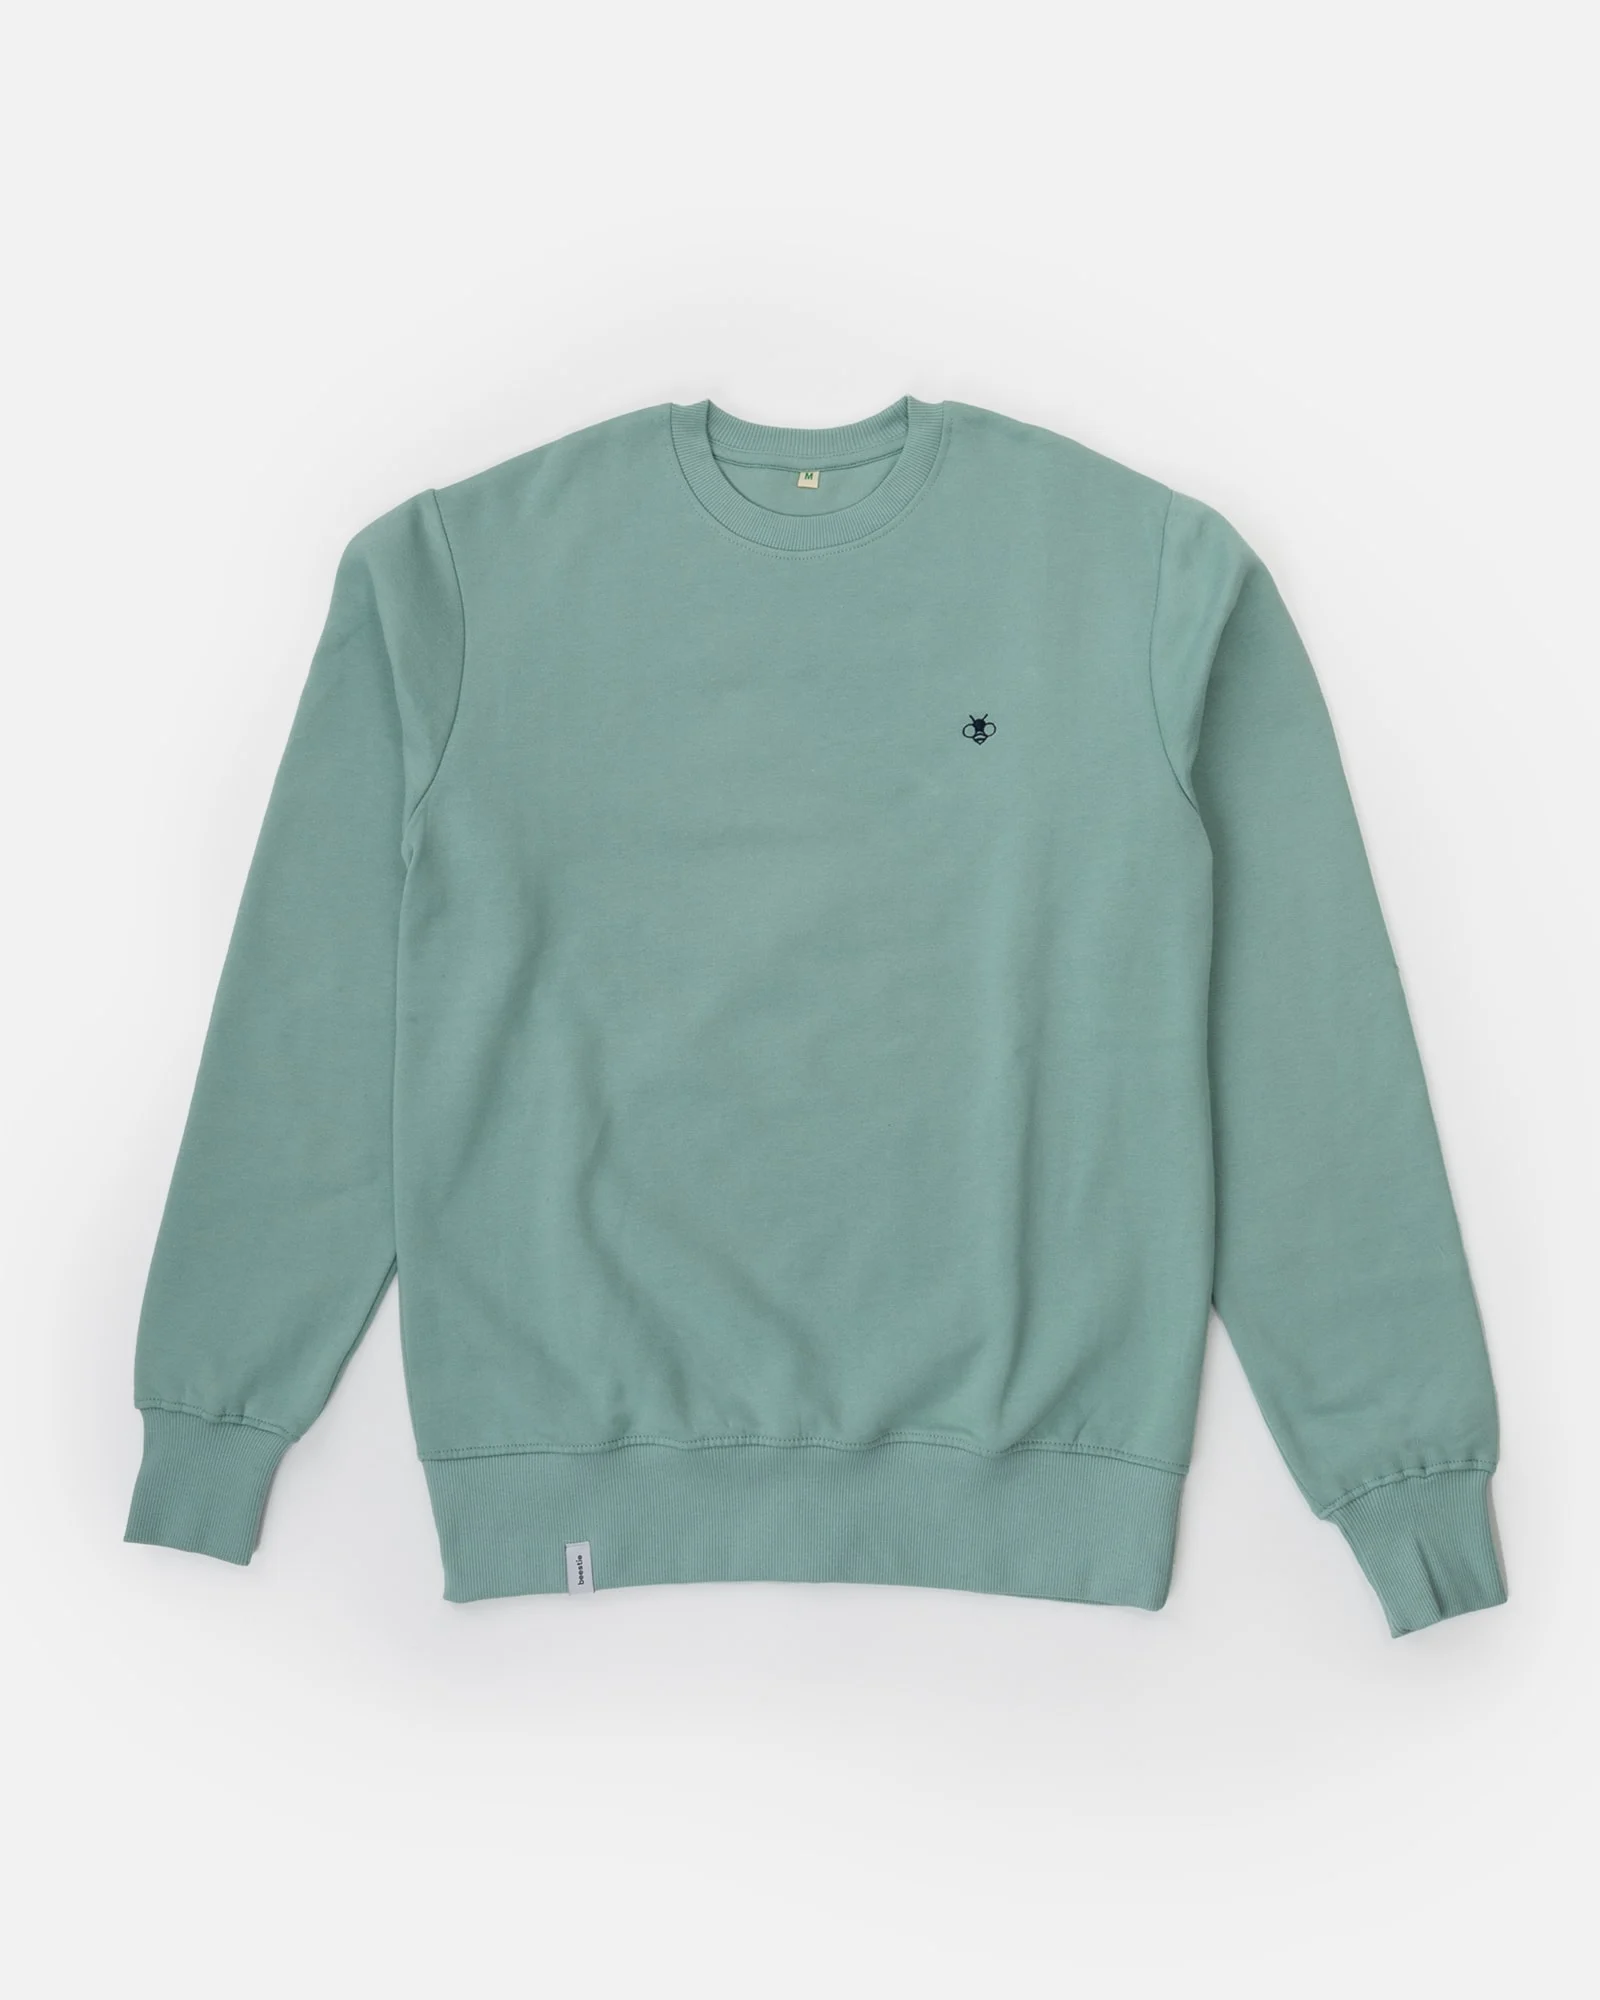 Produktbild des beestie Organic Classic Sweatshirt Slate Green